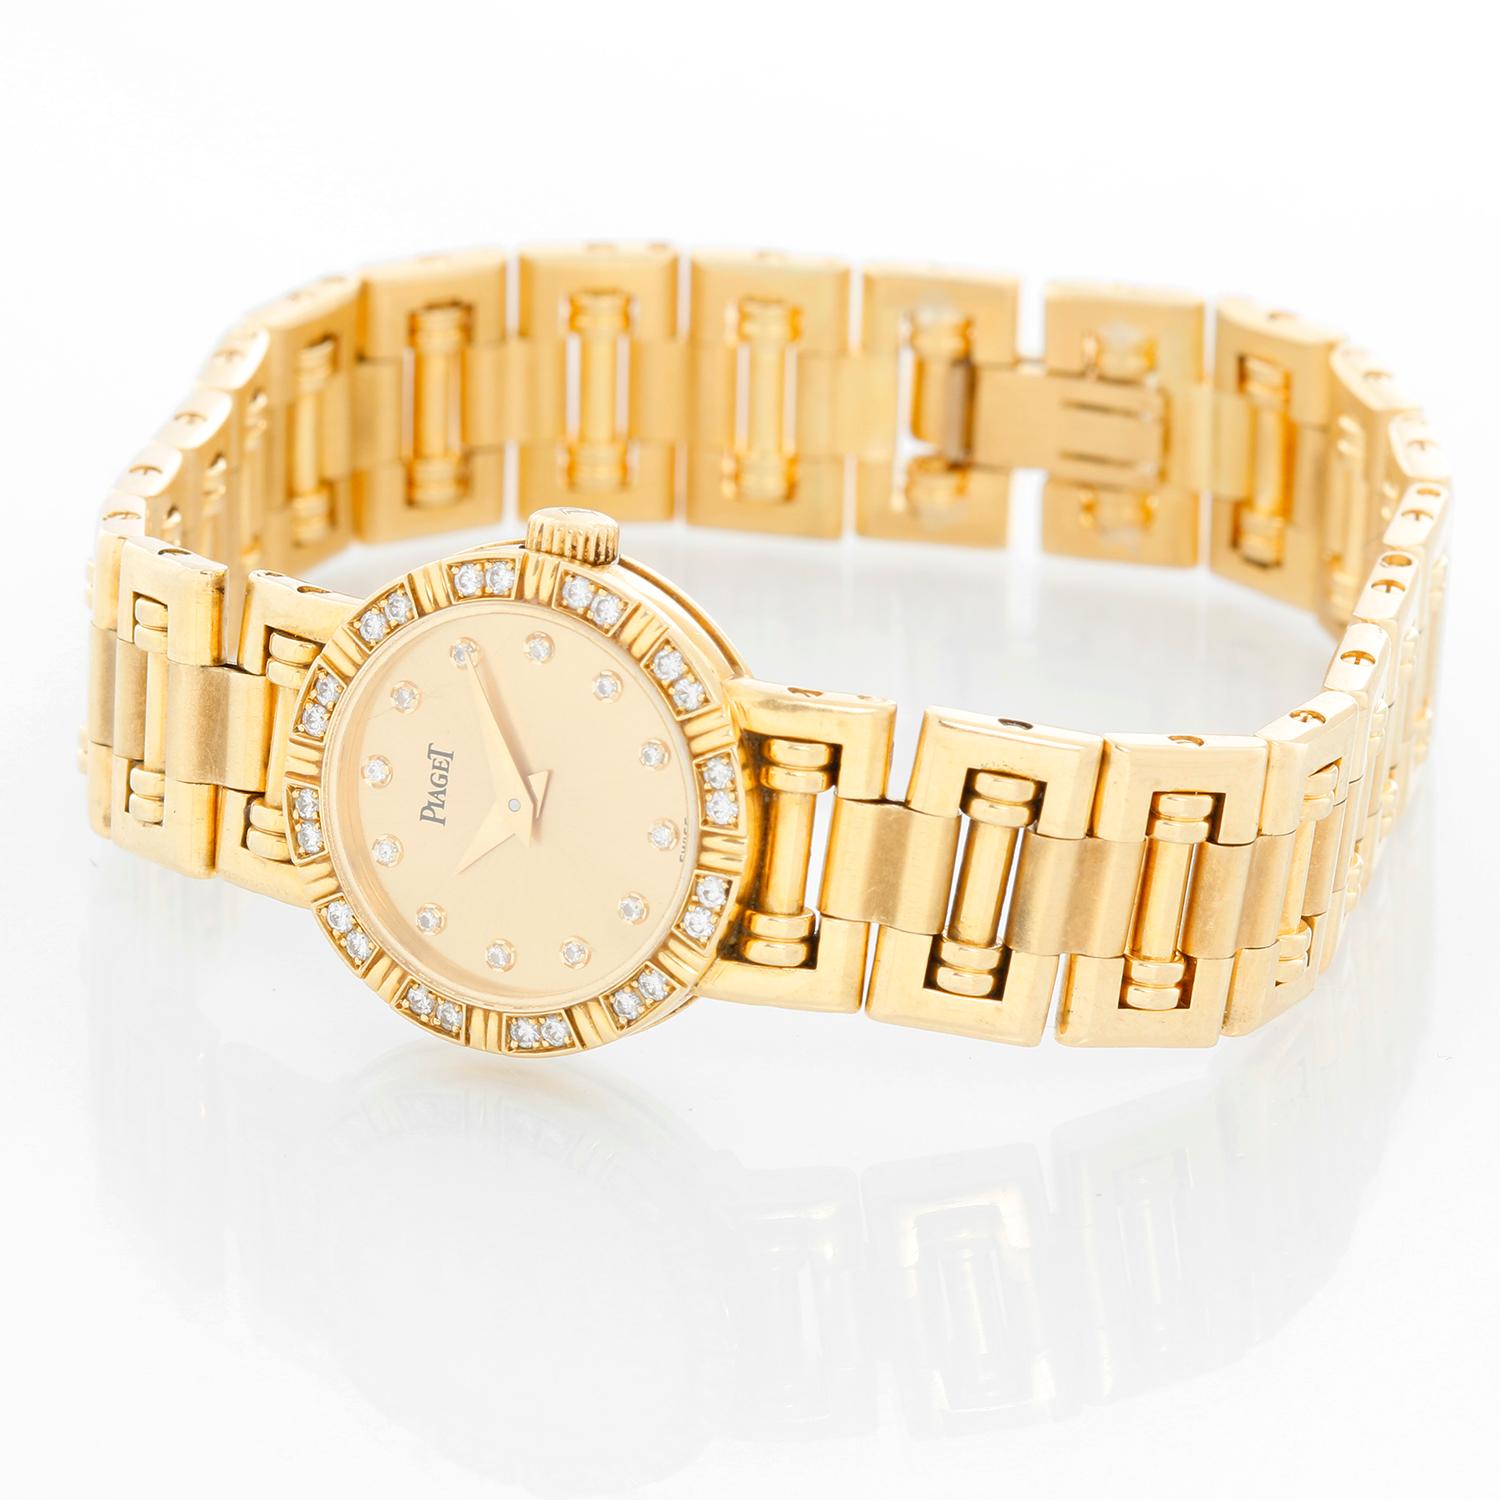 Piaget Ladies Yellow Gold Diamond Watch - Quartz. 18k yellow gold bezel with diamonds (19 mm). Champagne diamond dial. 18k yellow gold bracelet; will fit a 6 1/2 inch wrist. Pre-owned with custom box. 